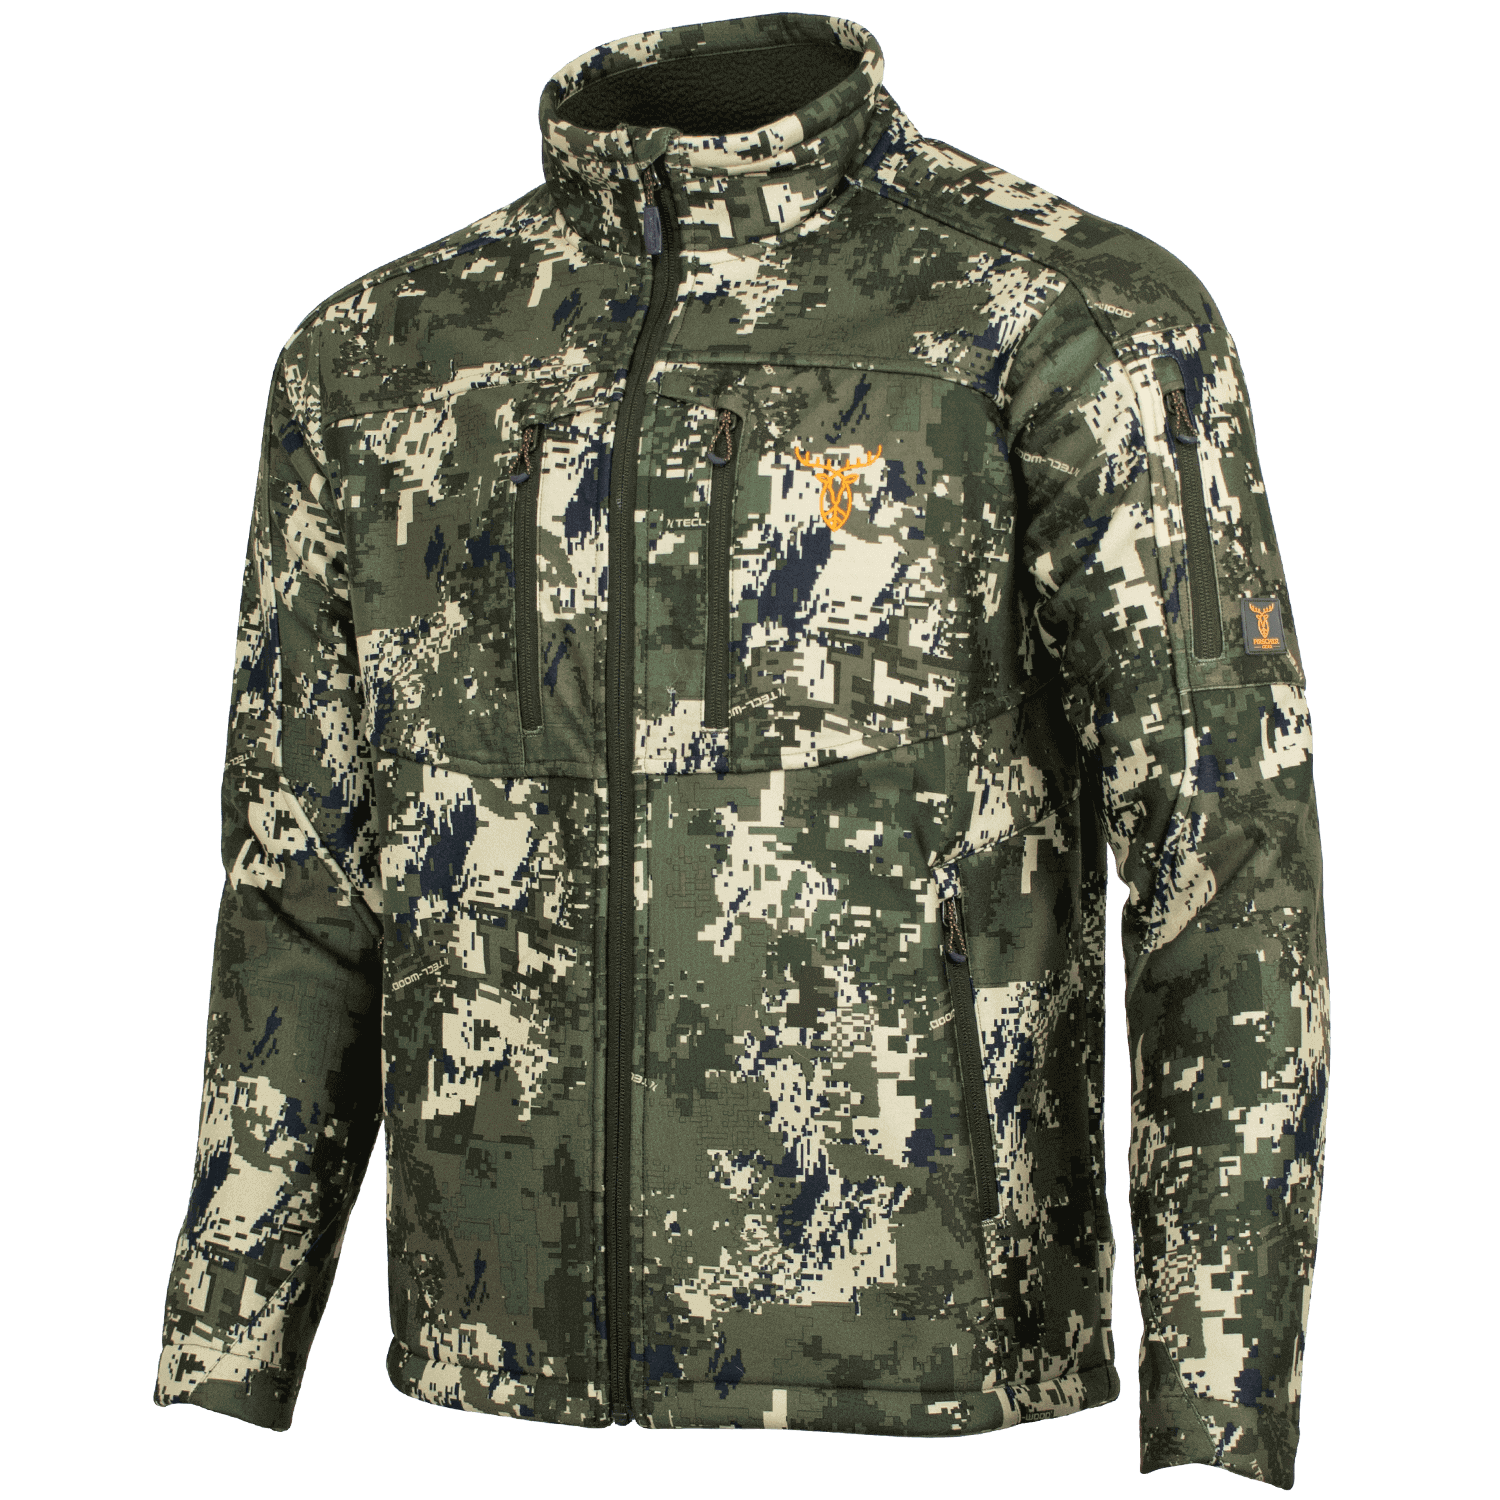 Pirscher Gear Silence Pro Jacket (Optimax) - Hunting Jackets